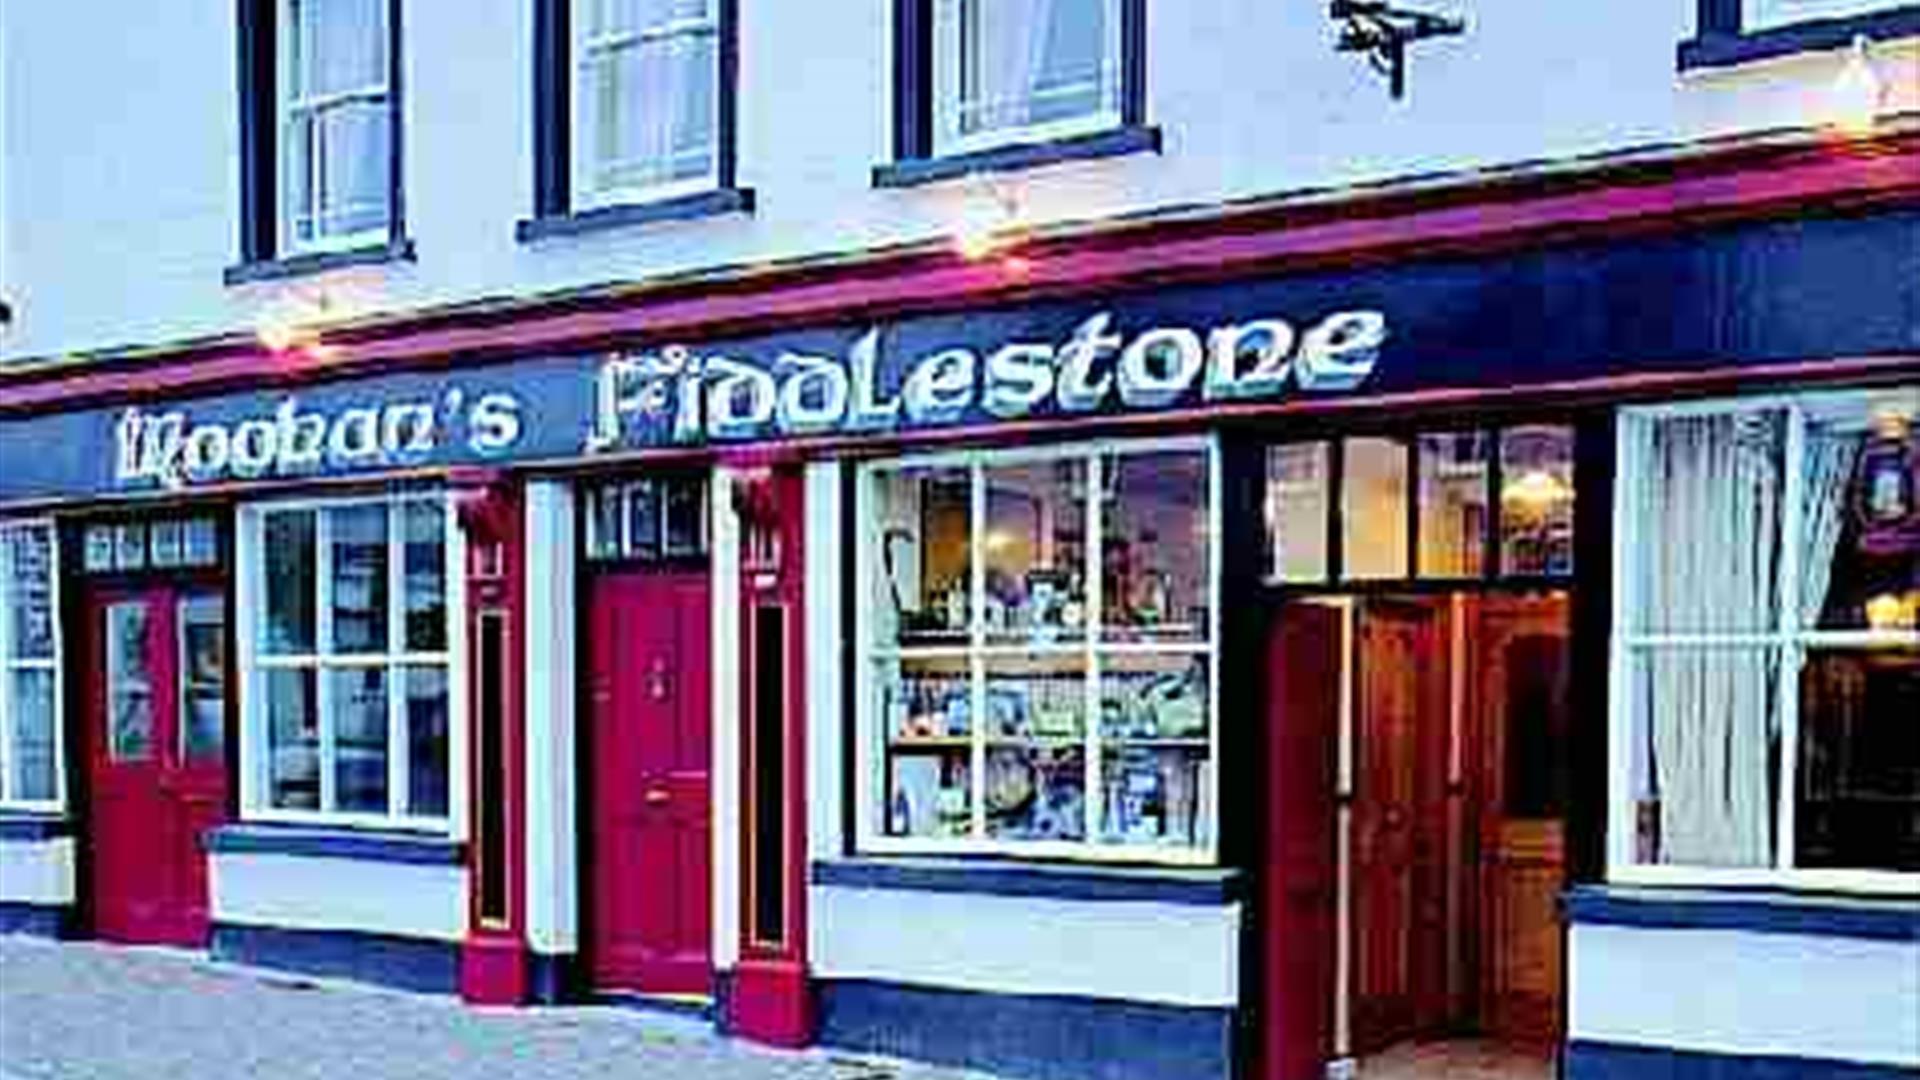 The Fiddlestone Bar & Guest House